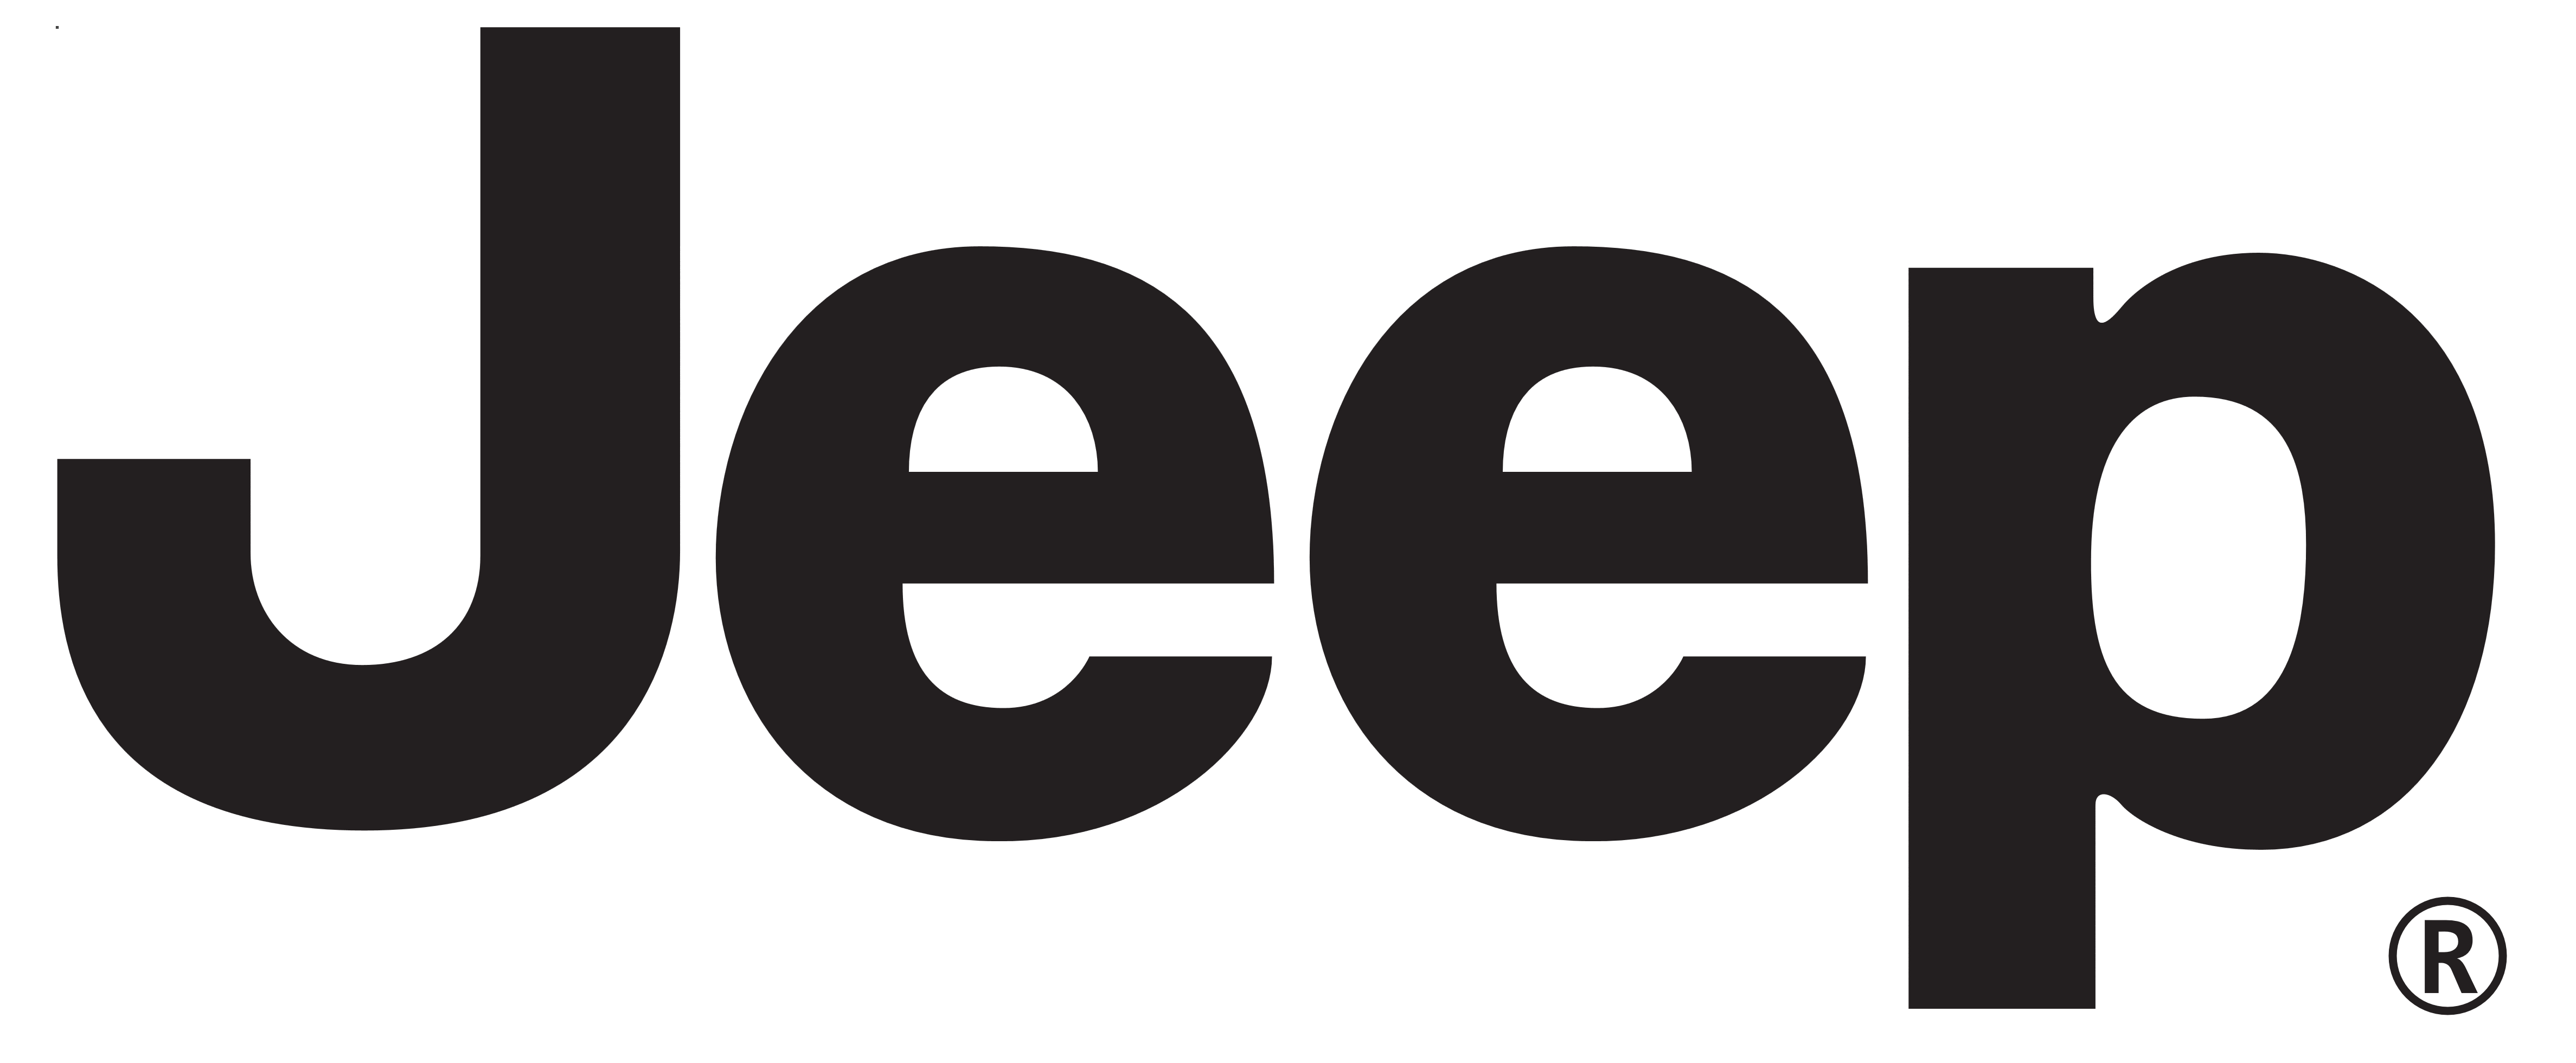 Jeep logo, logotype